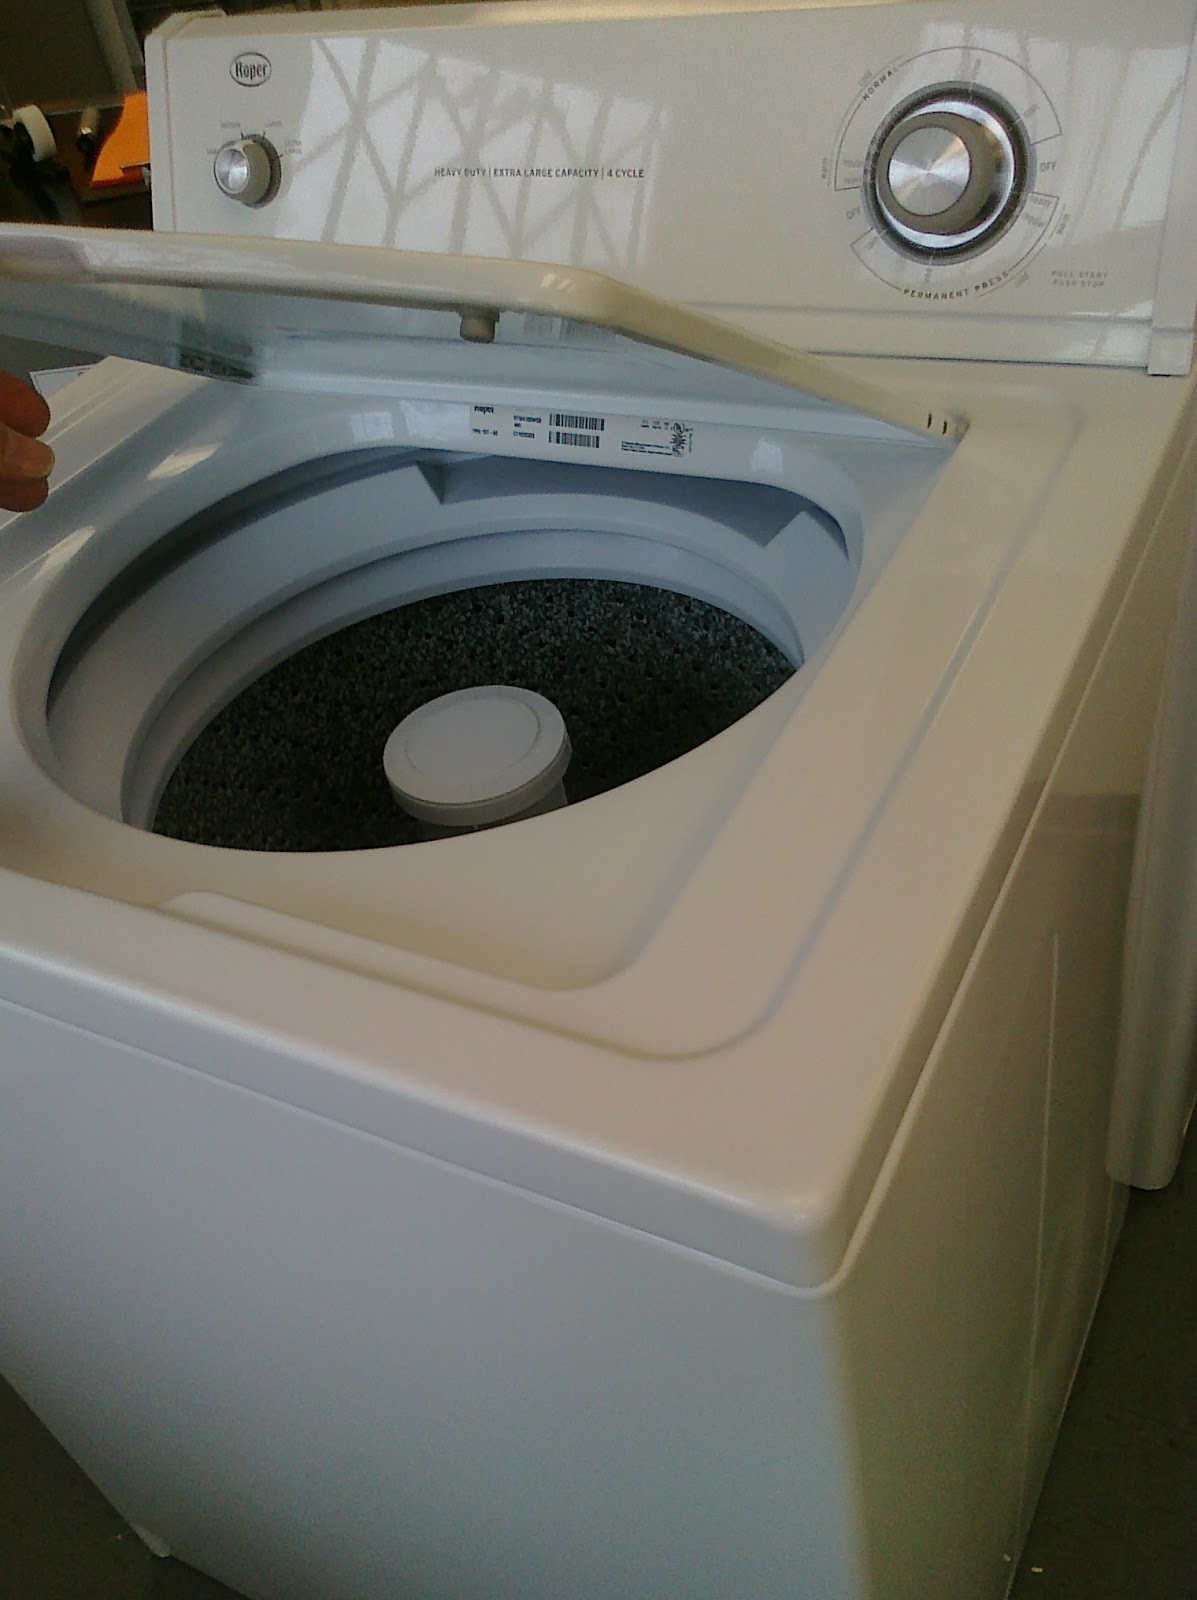 Who makes Roper washing machines?